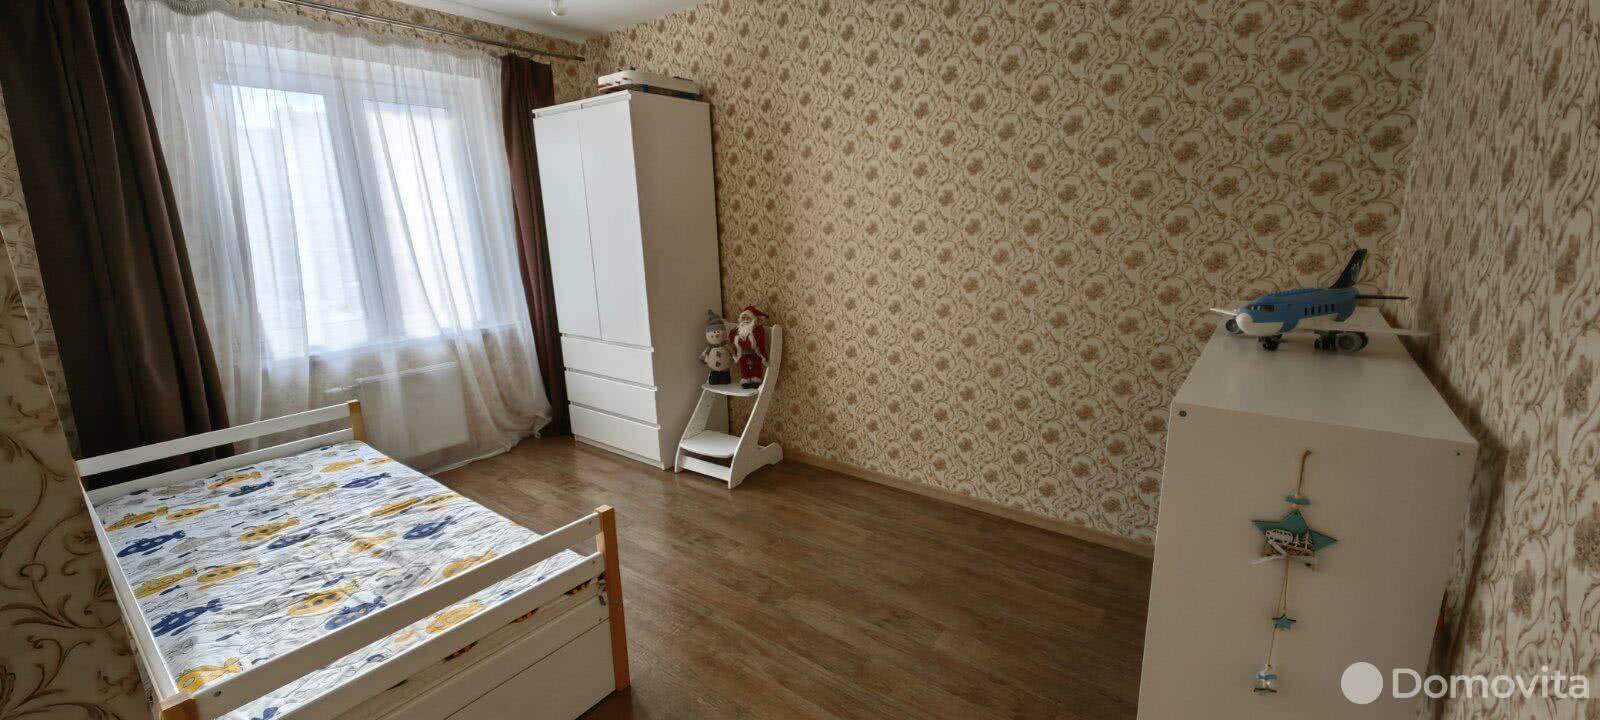 квартира, Минск, ул. Юрия Семеняко, д. 15, стоимость продажи 278 055 р.